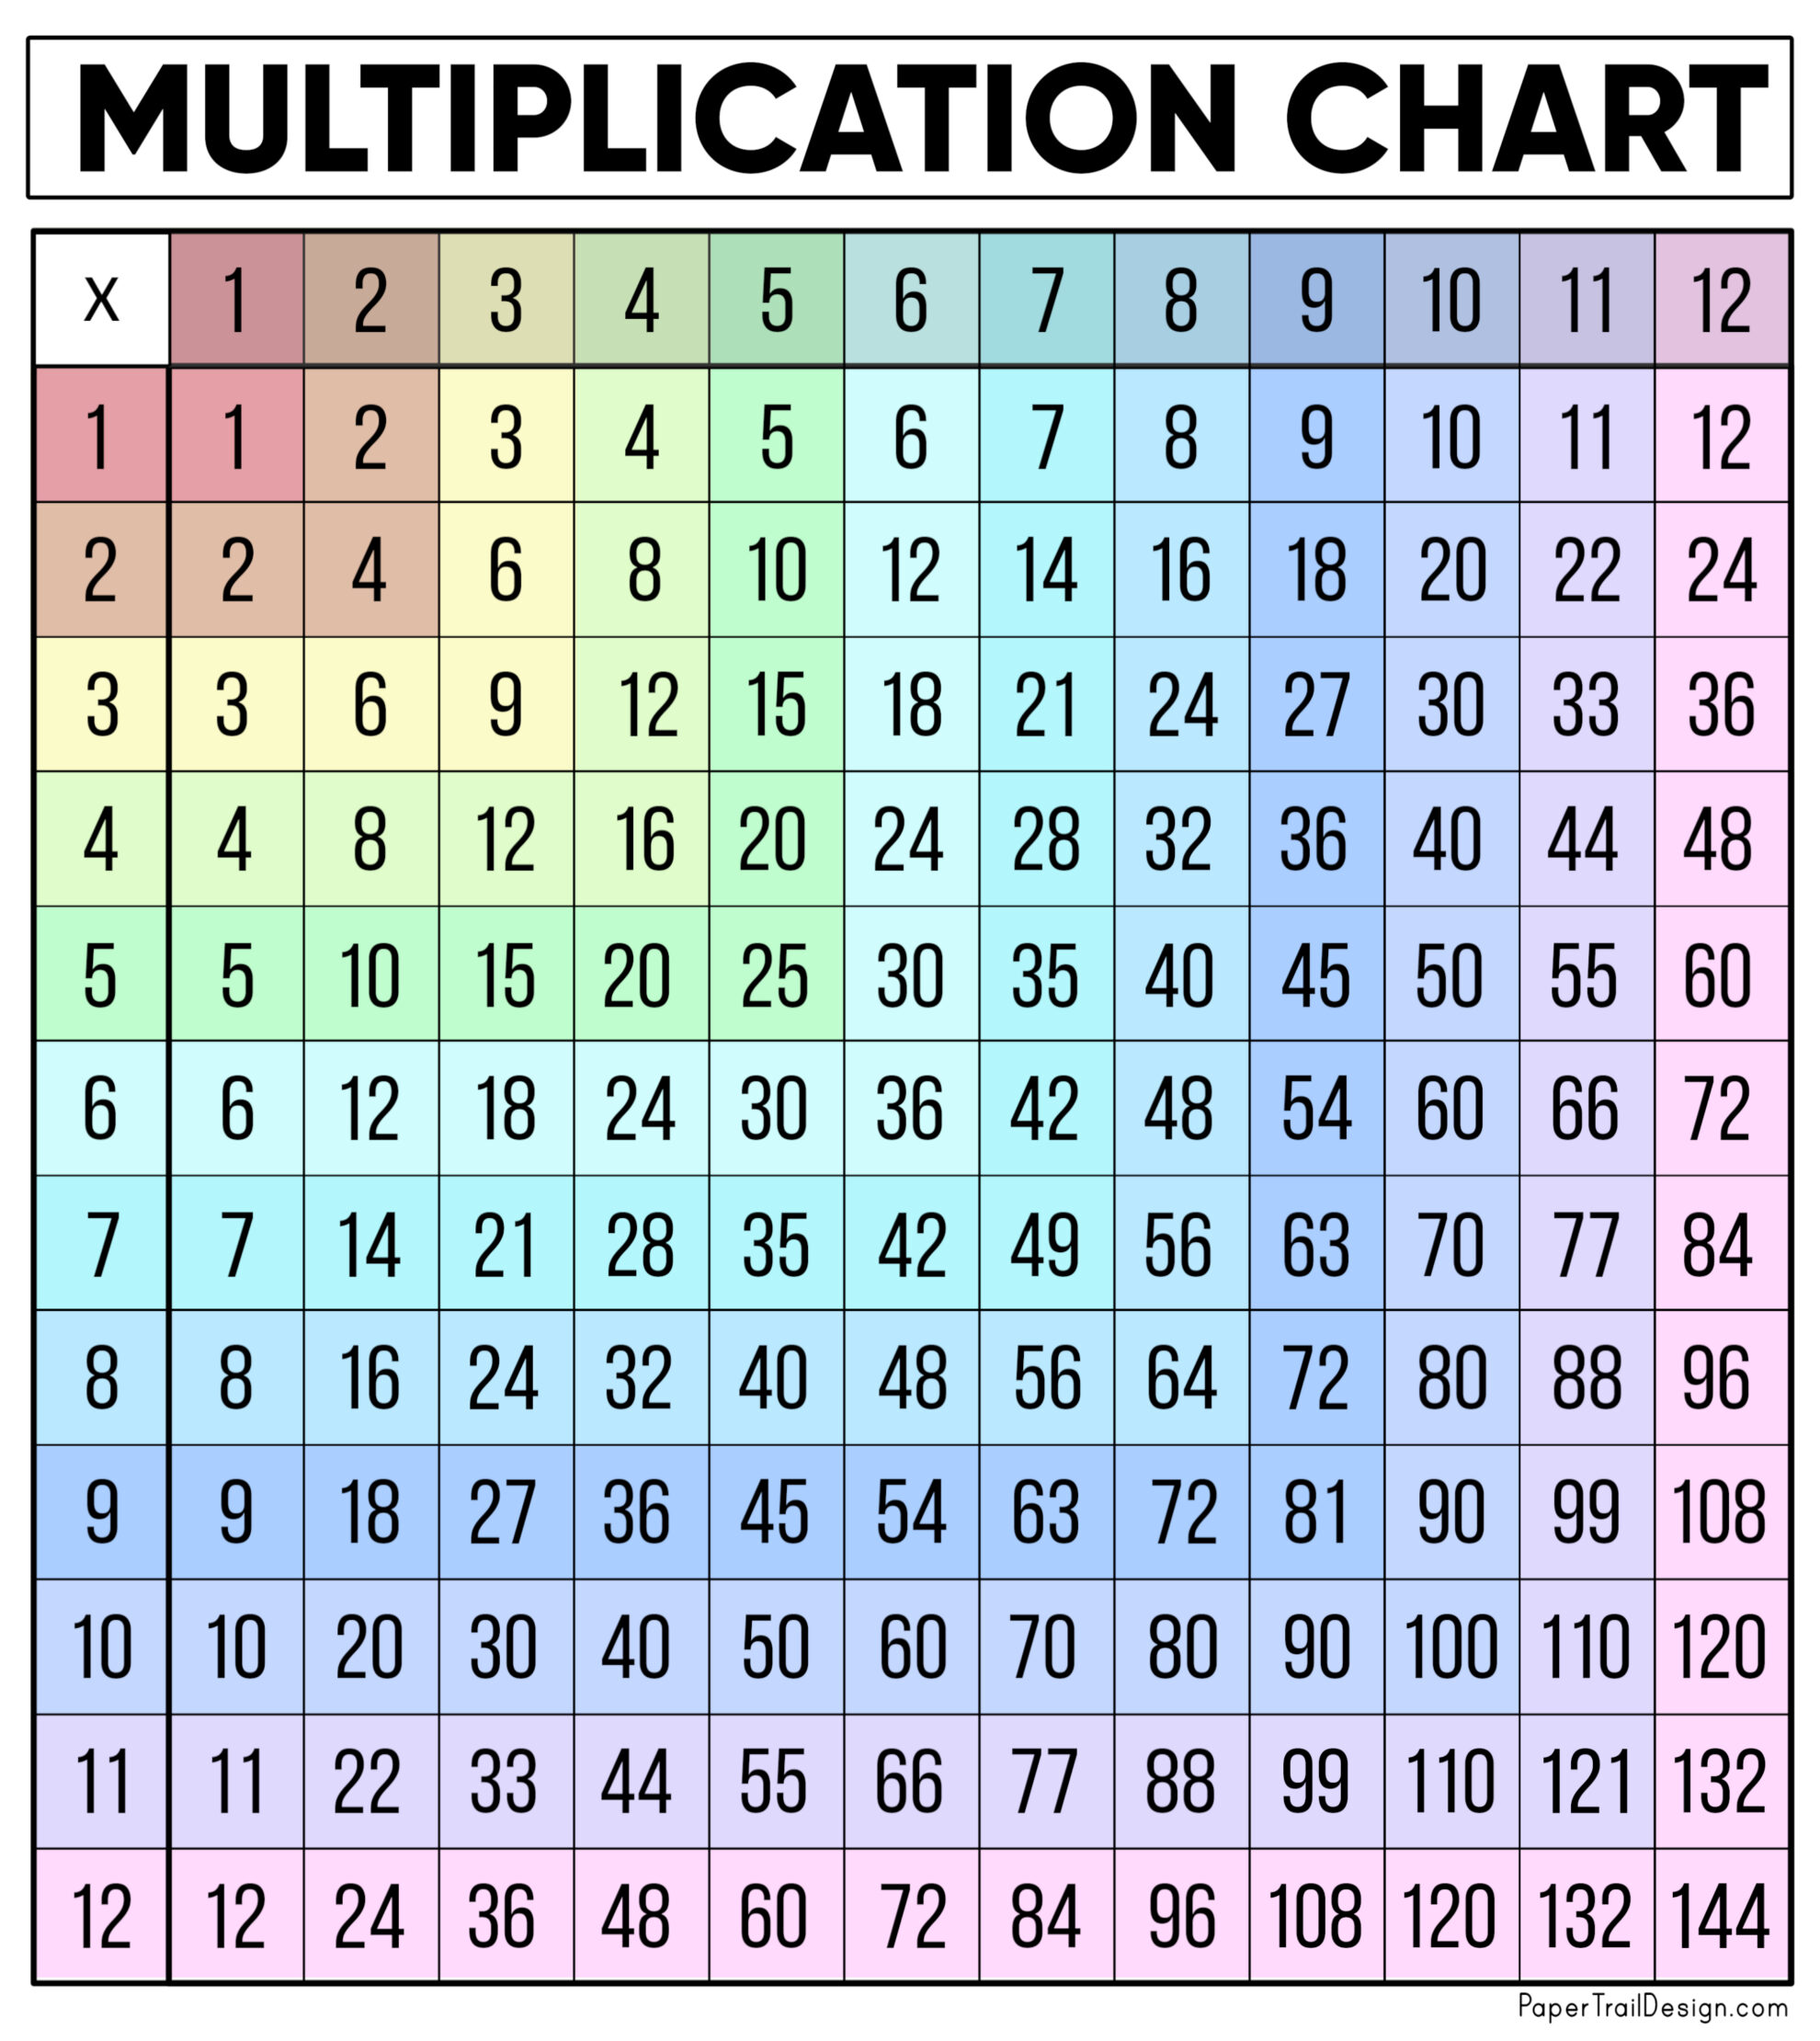 multiplication table printable to 12